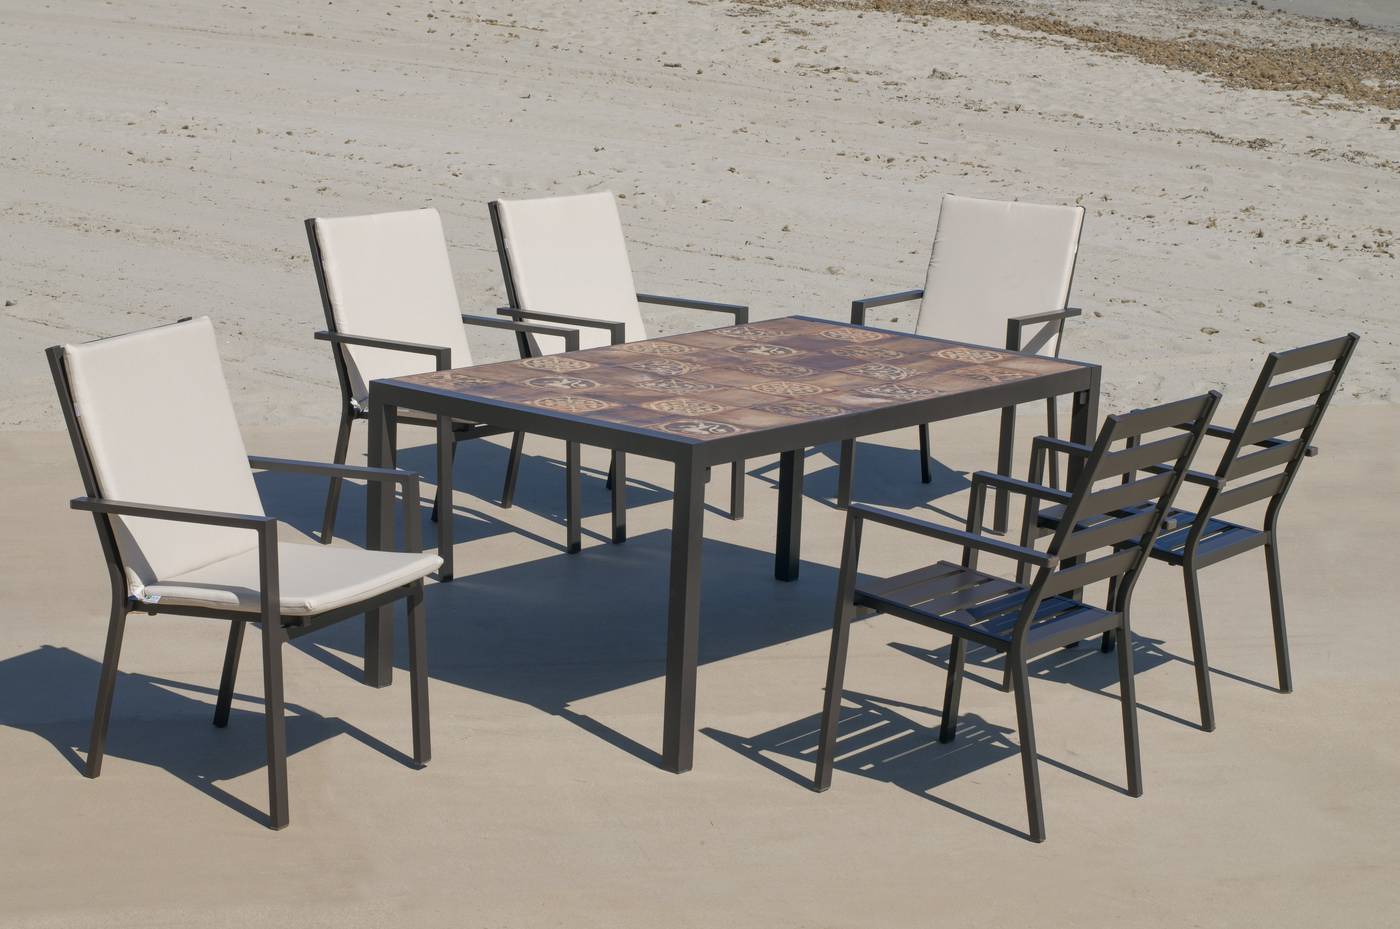 Conjunto de aluminio color marrón: Mesa rectangular con tablero mosaico de 160 cm + 6 sillones.